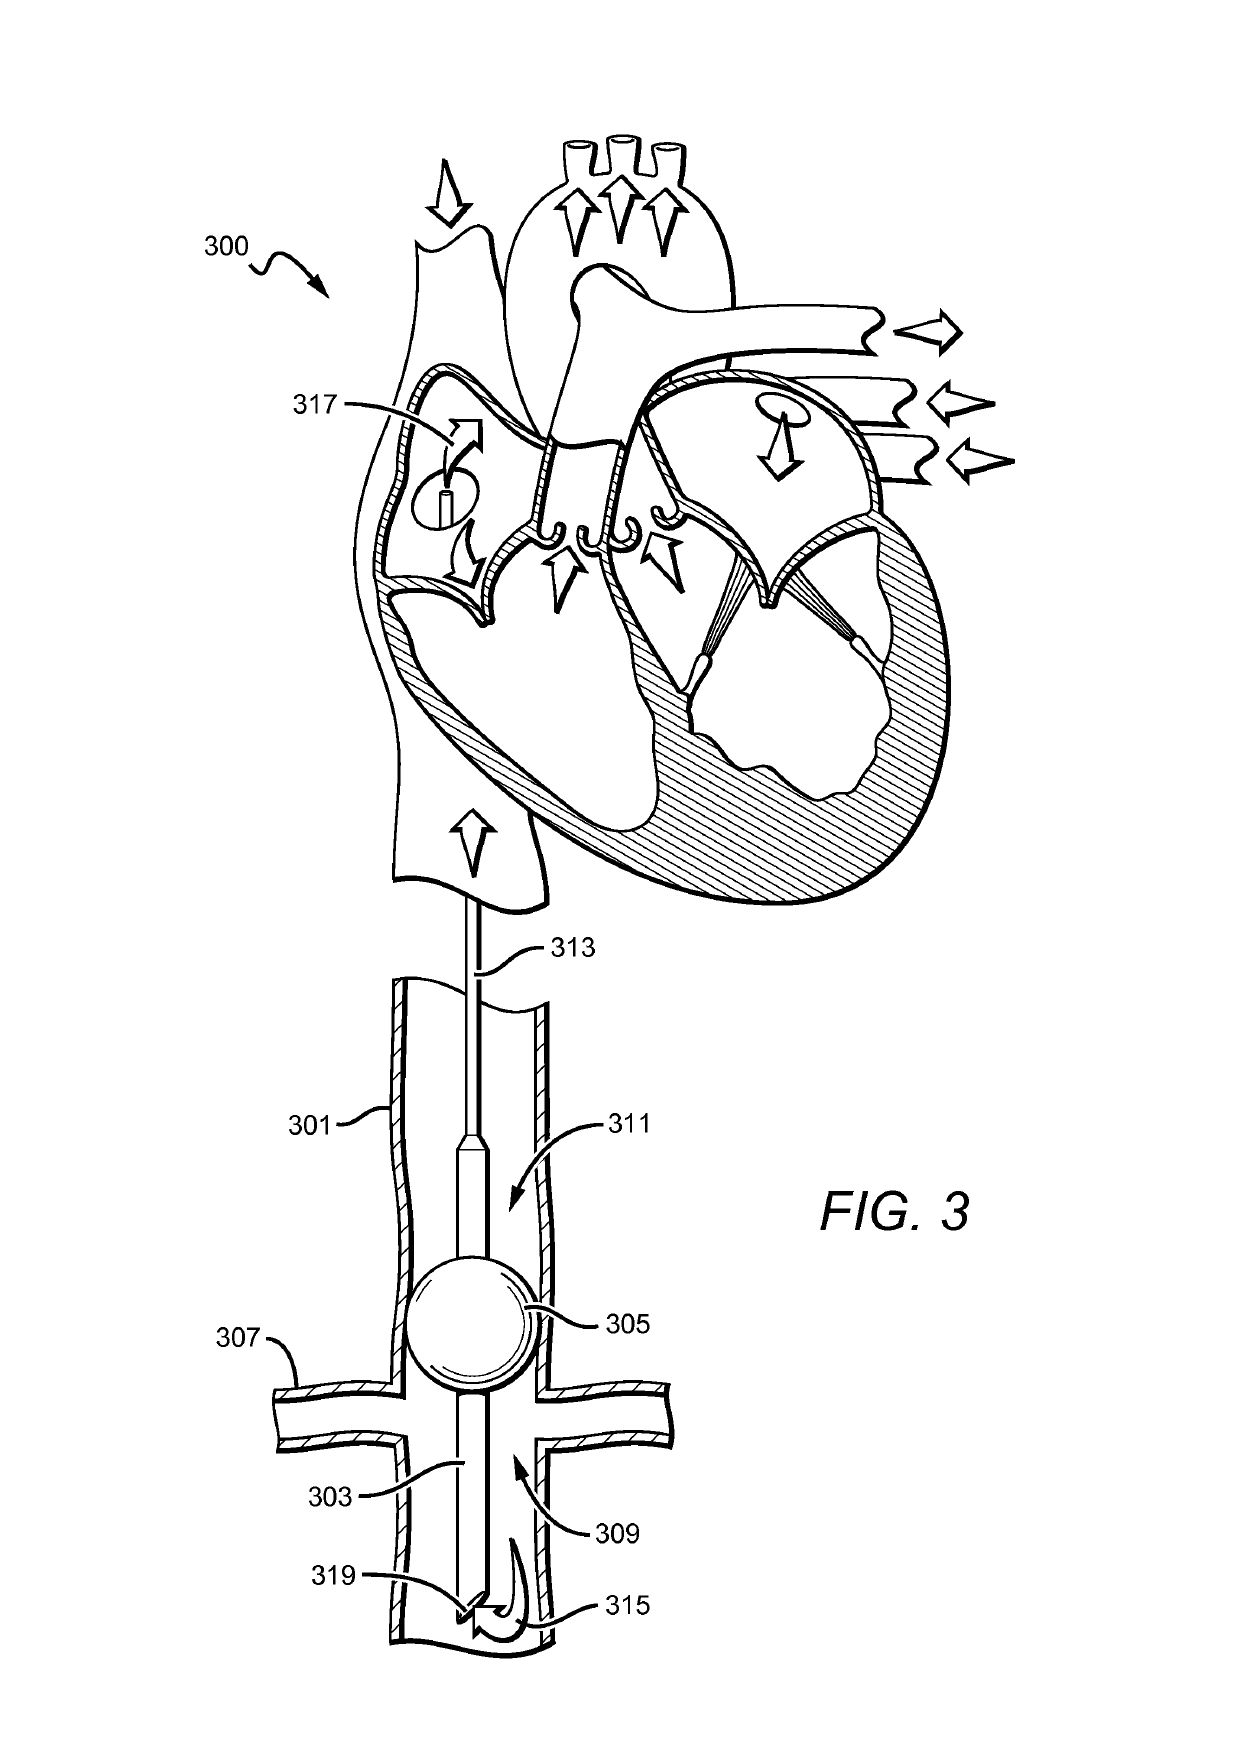 Catheter-based pump for improving organ function